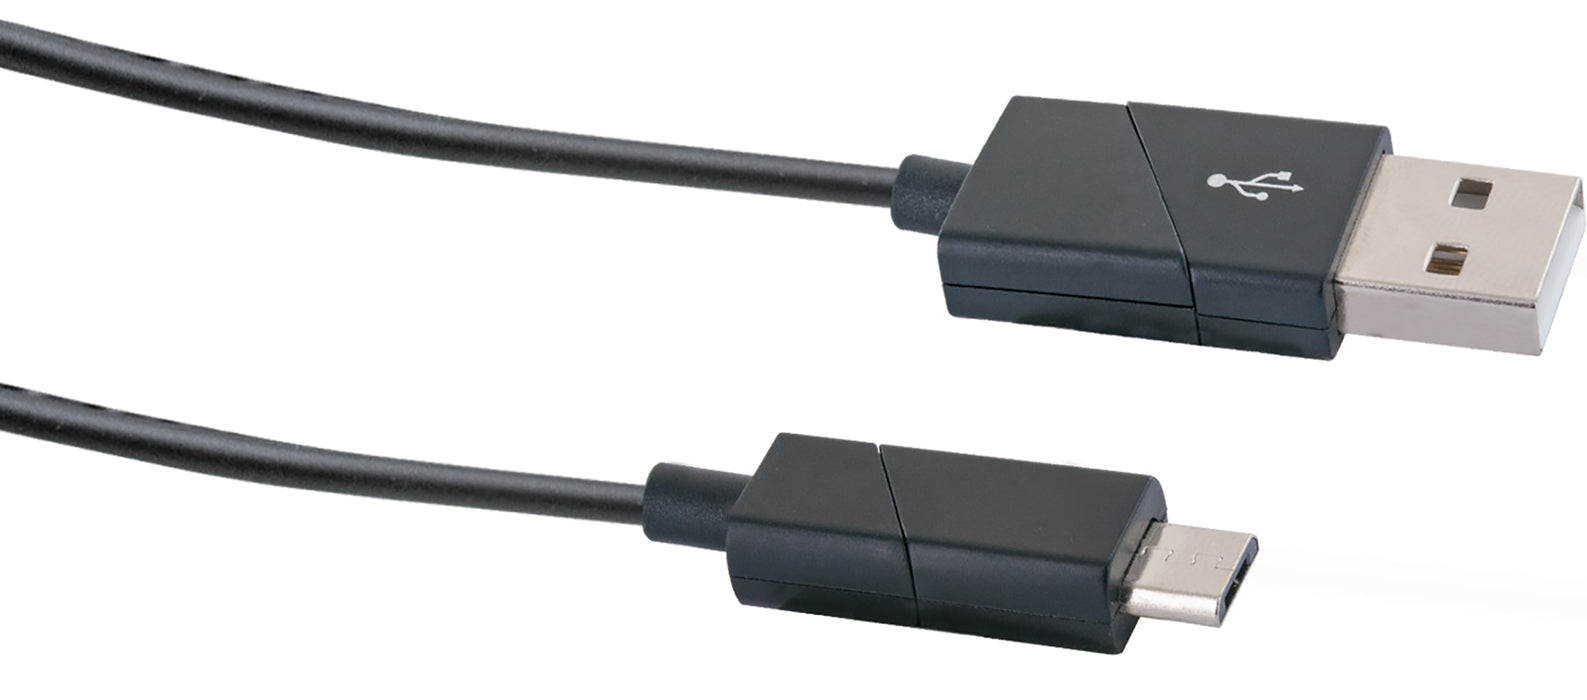 Micro USB Sync & Ladekabel, drehbar